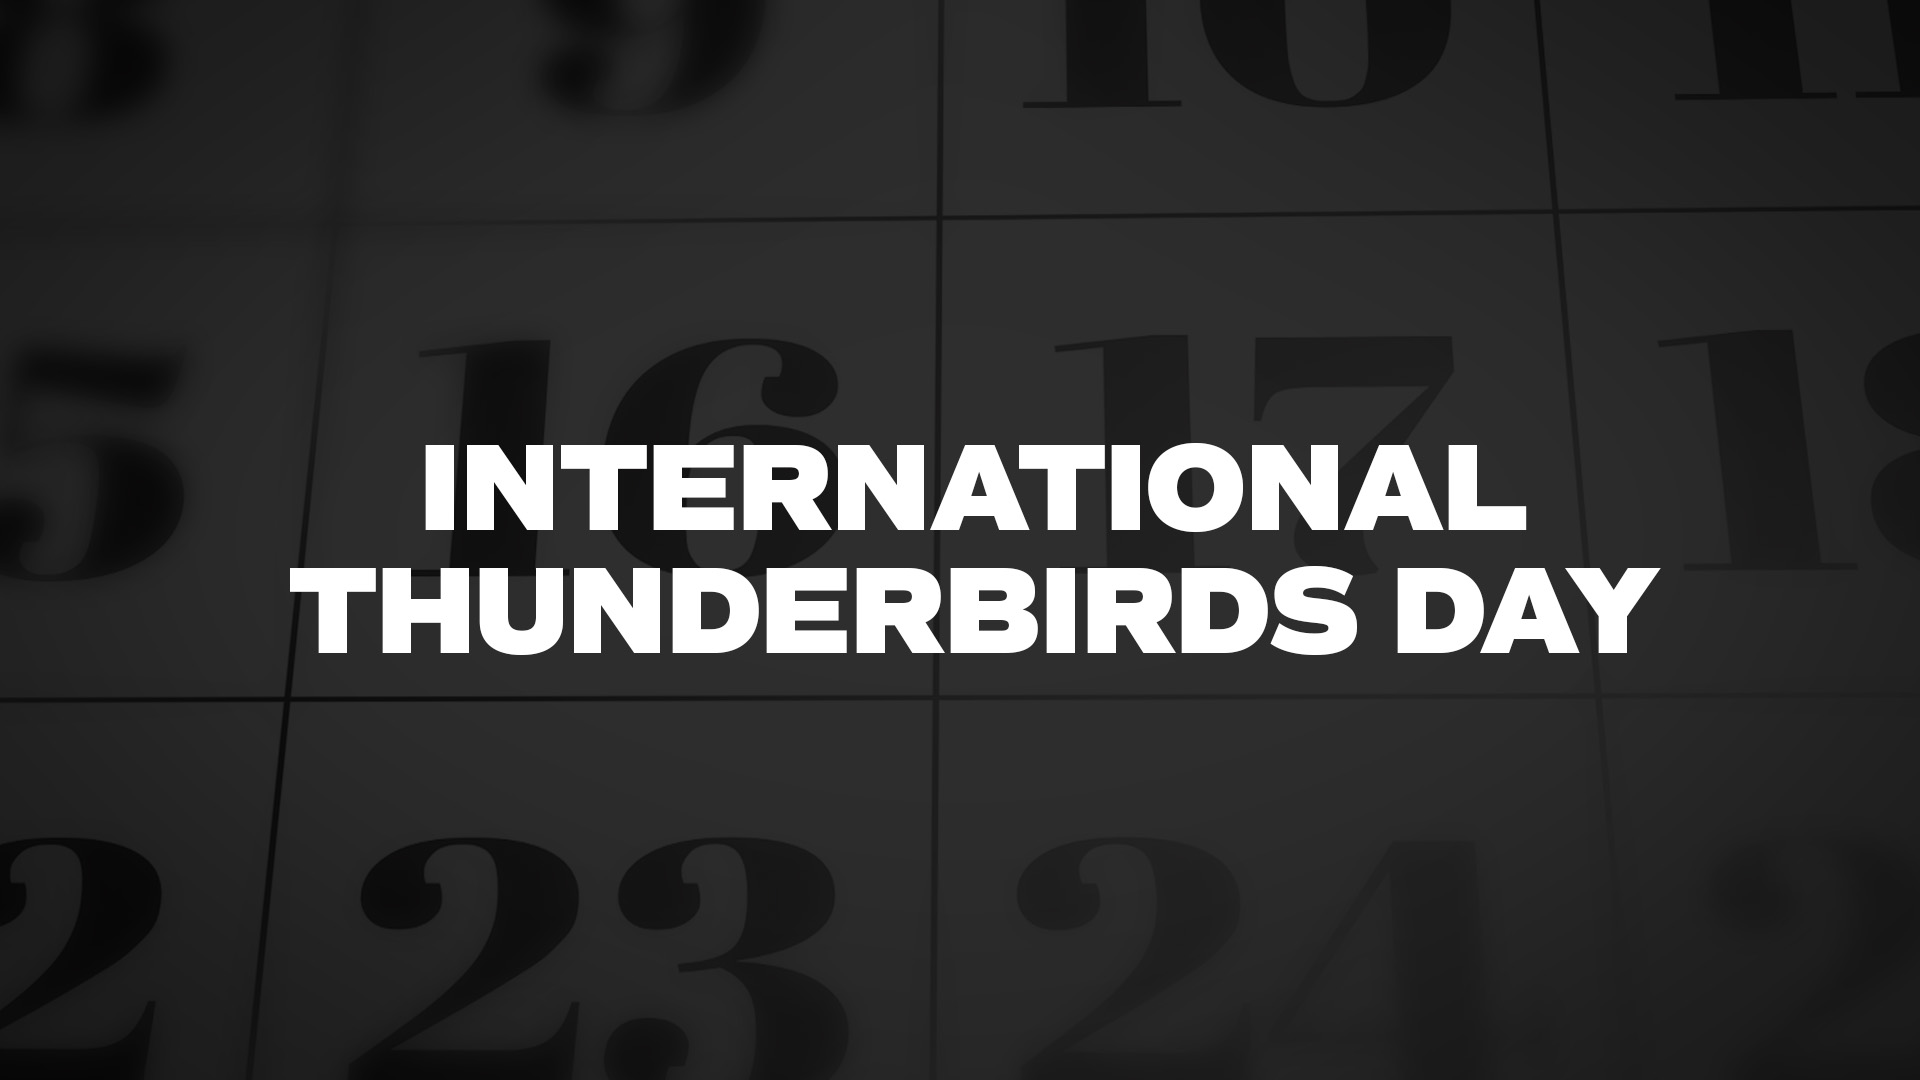 International Thunderbirds Day (September 30th)